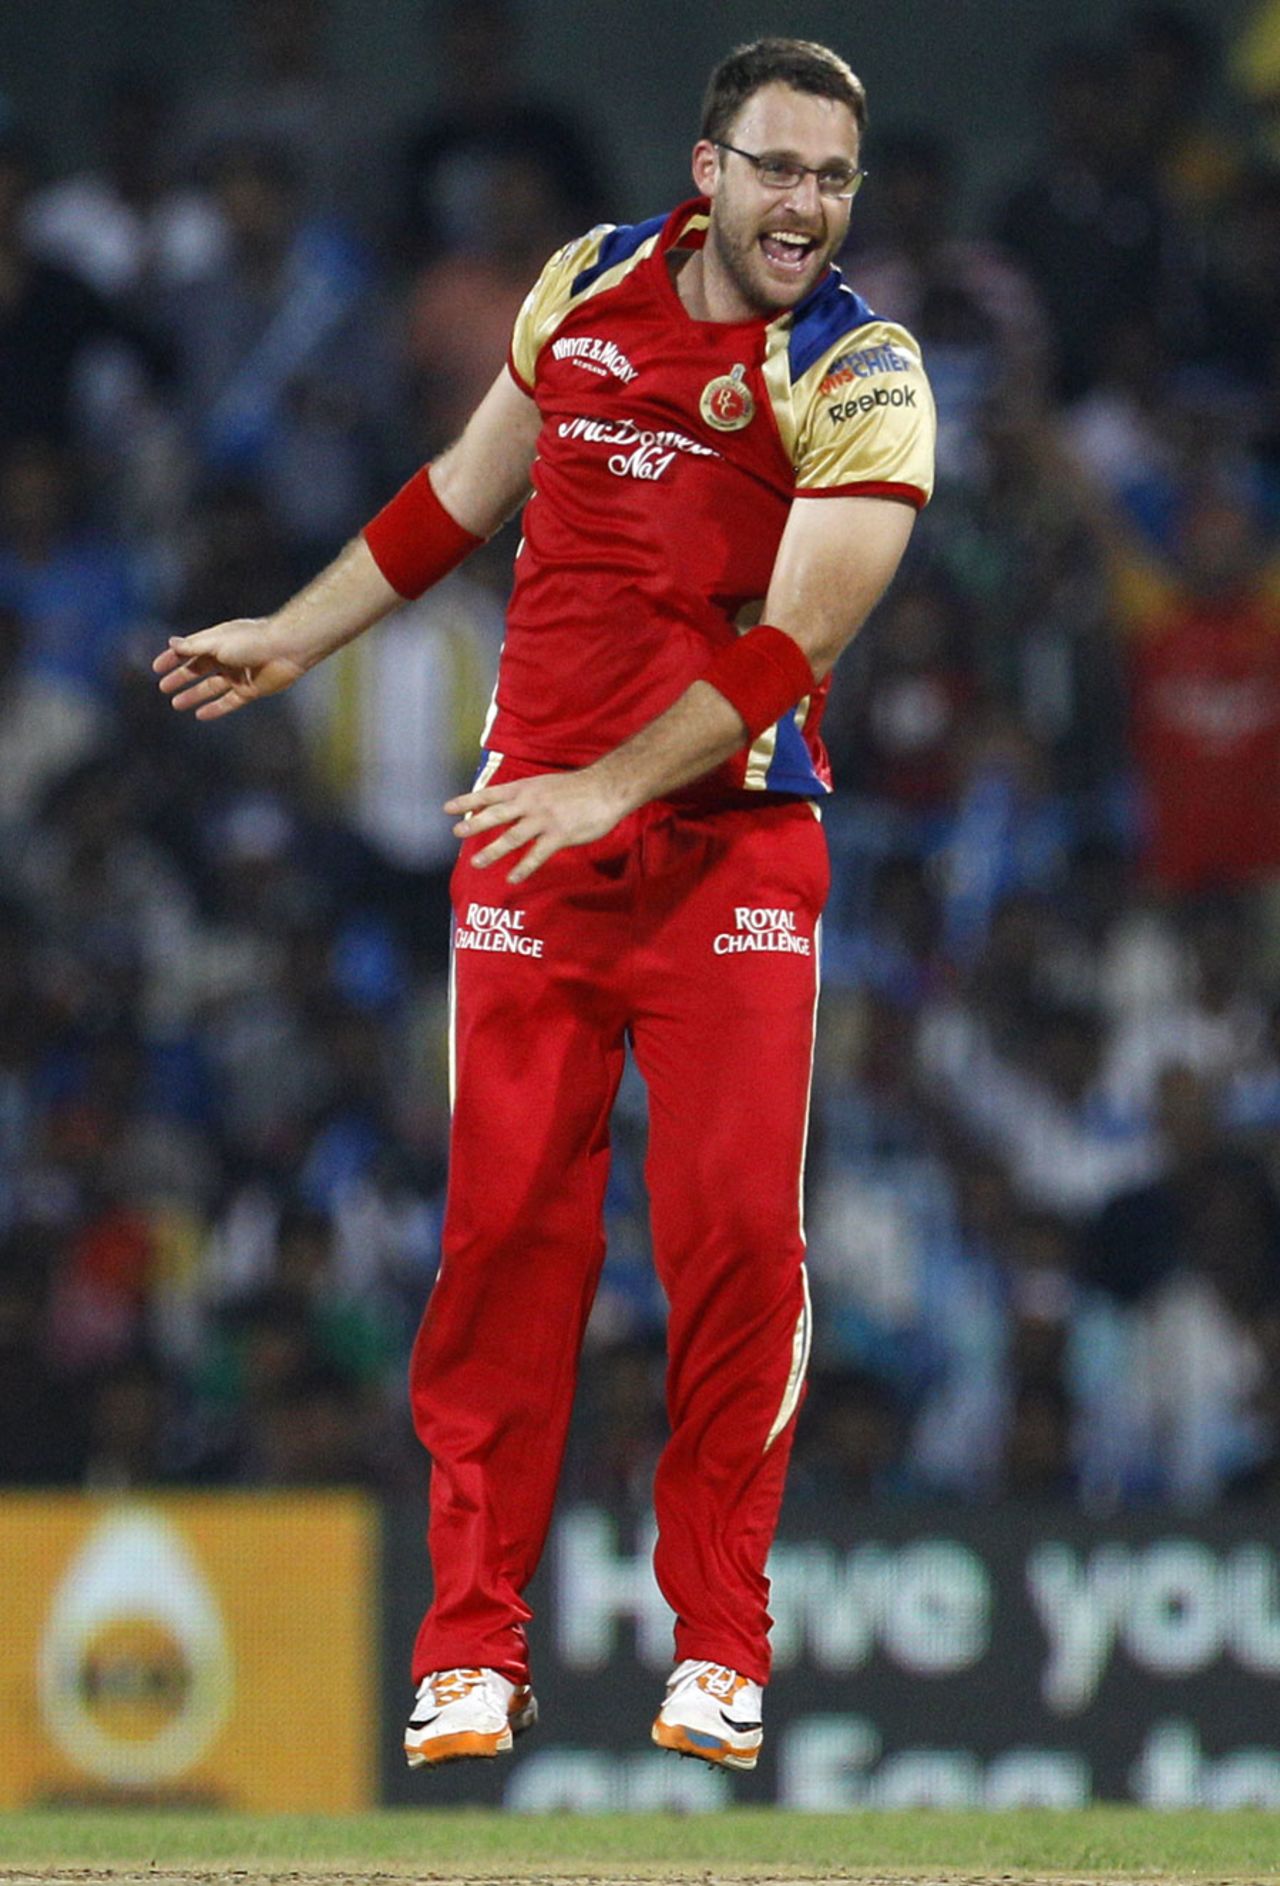 Daniel Vettori jumps after dismissing Harbhajan Singh, Mumbai Indians v RCB, CLT20 final, Chennai, October 9, 2011